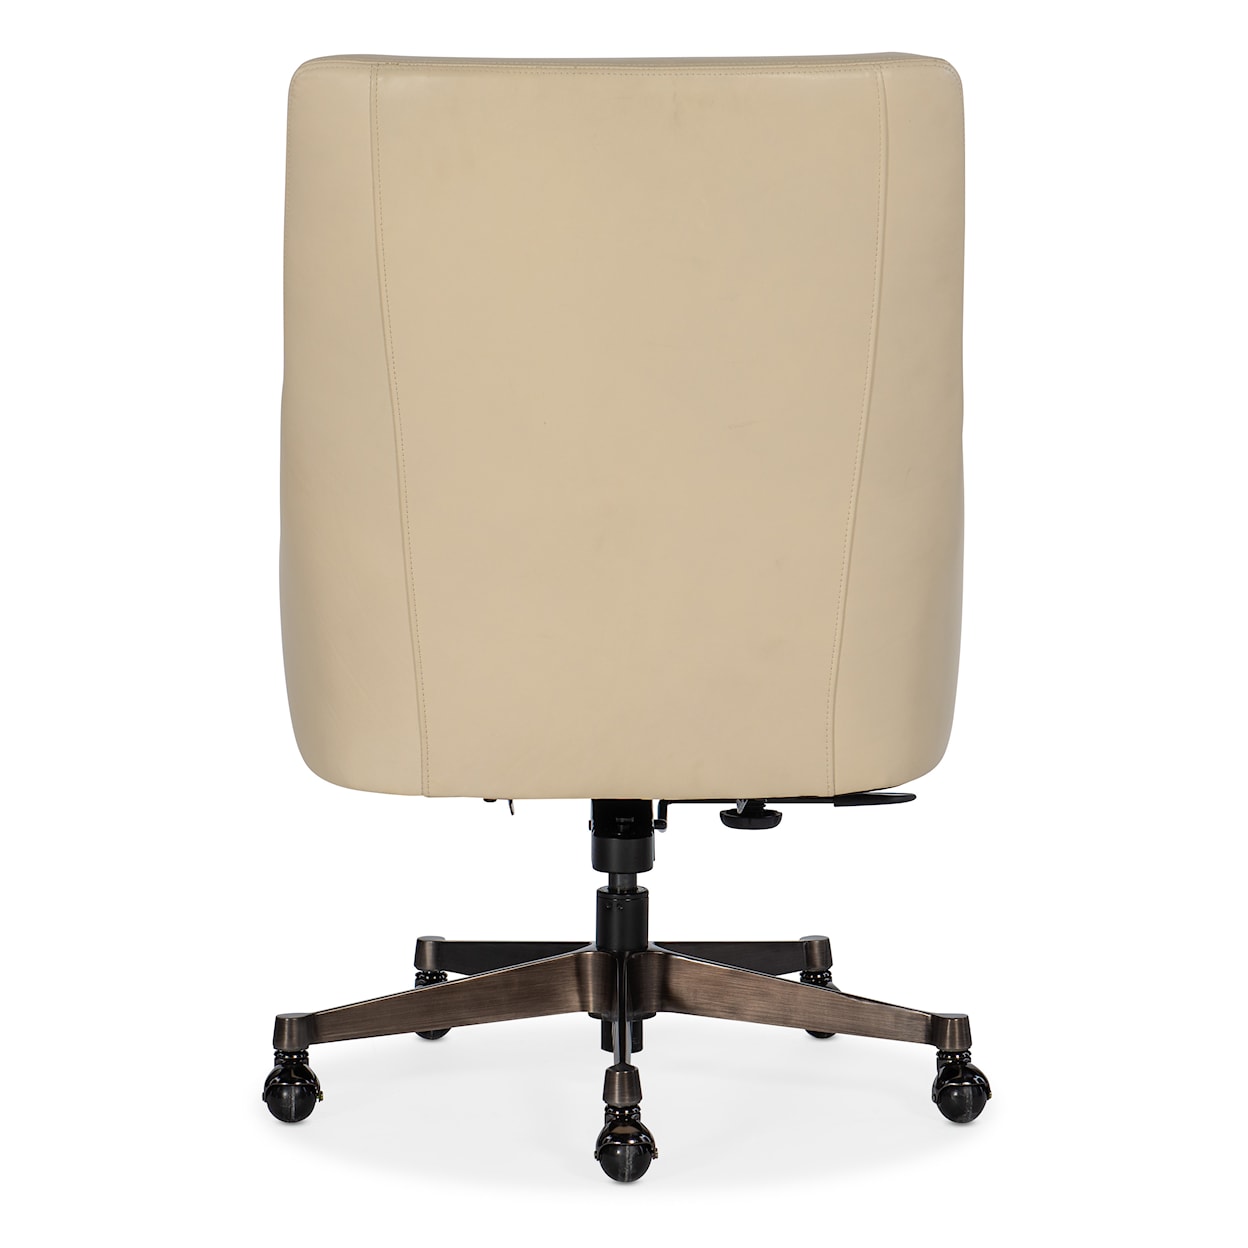 Hooker Furniture Executive Seating Paula Executive Swivel Tilt Chair